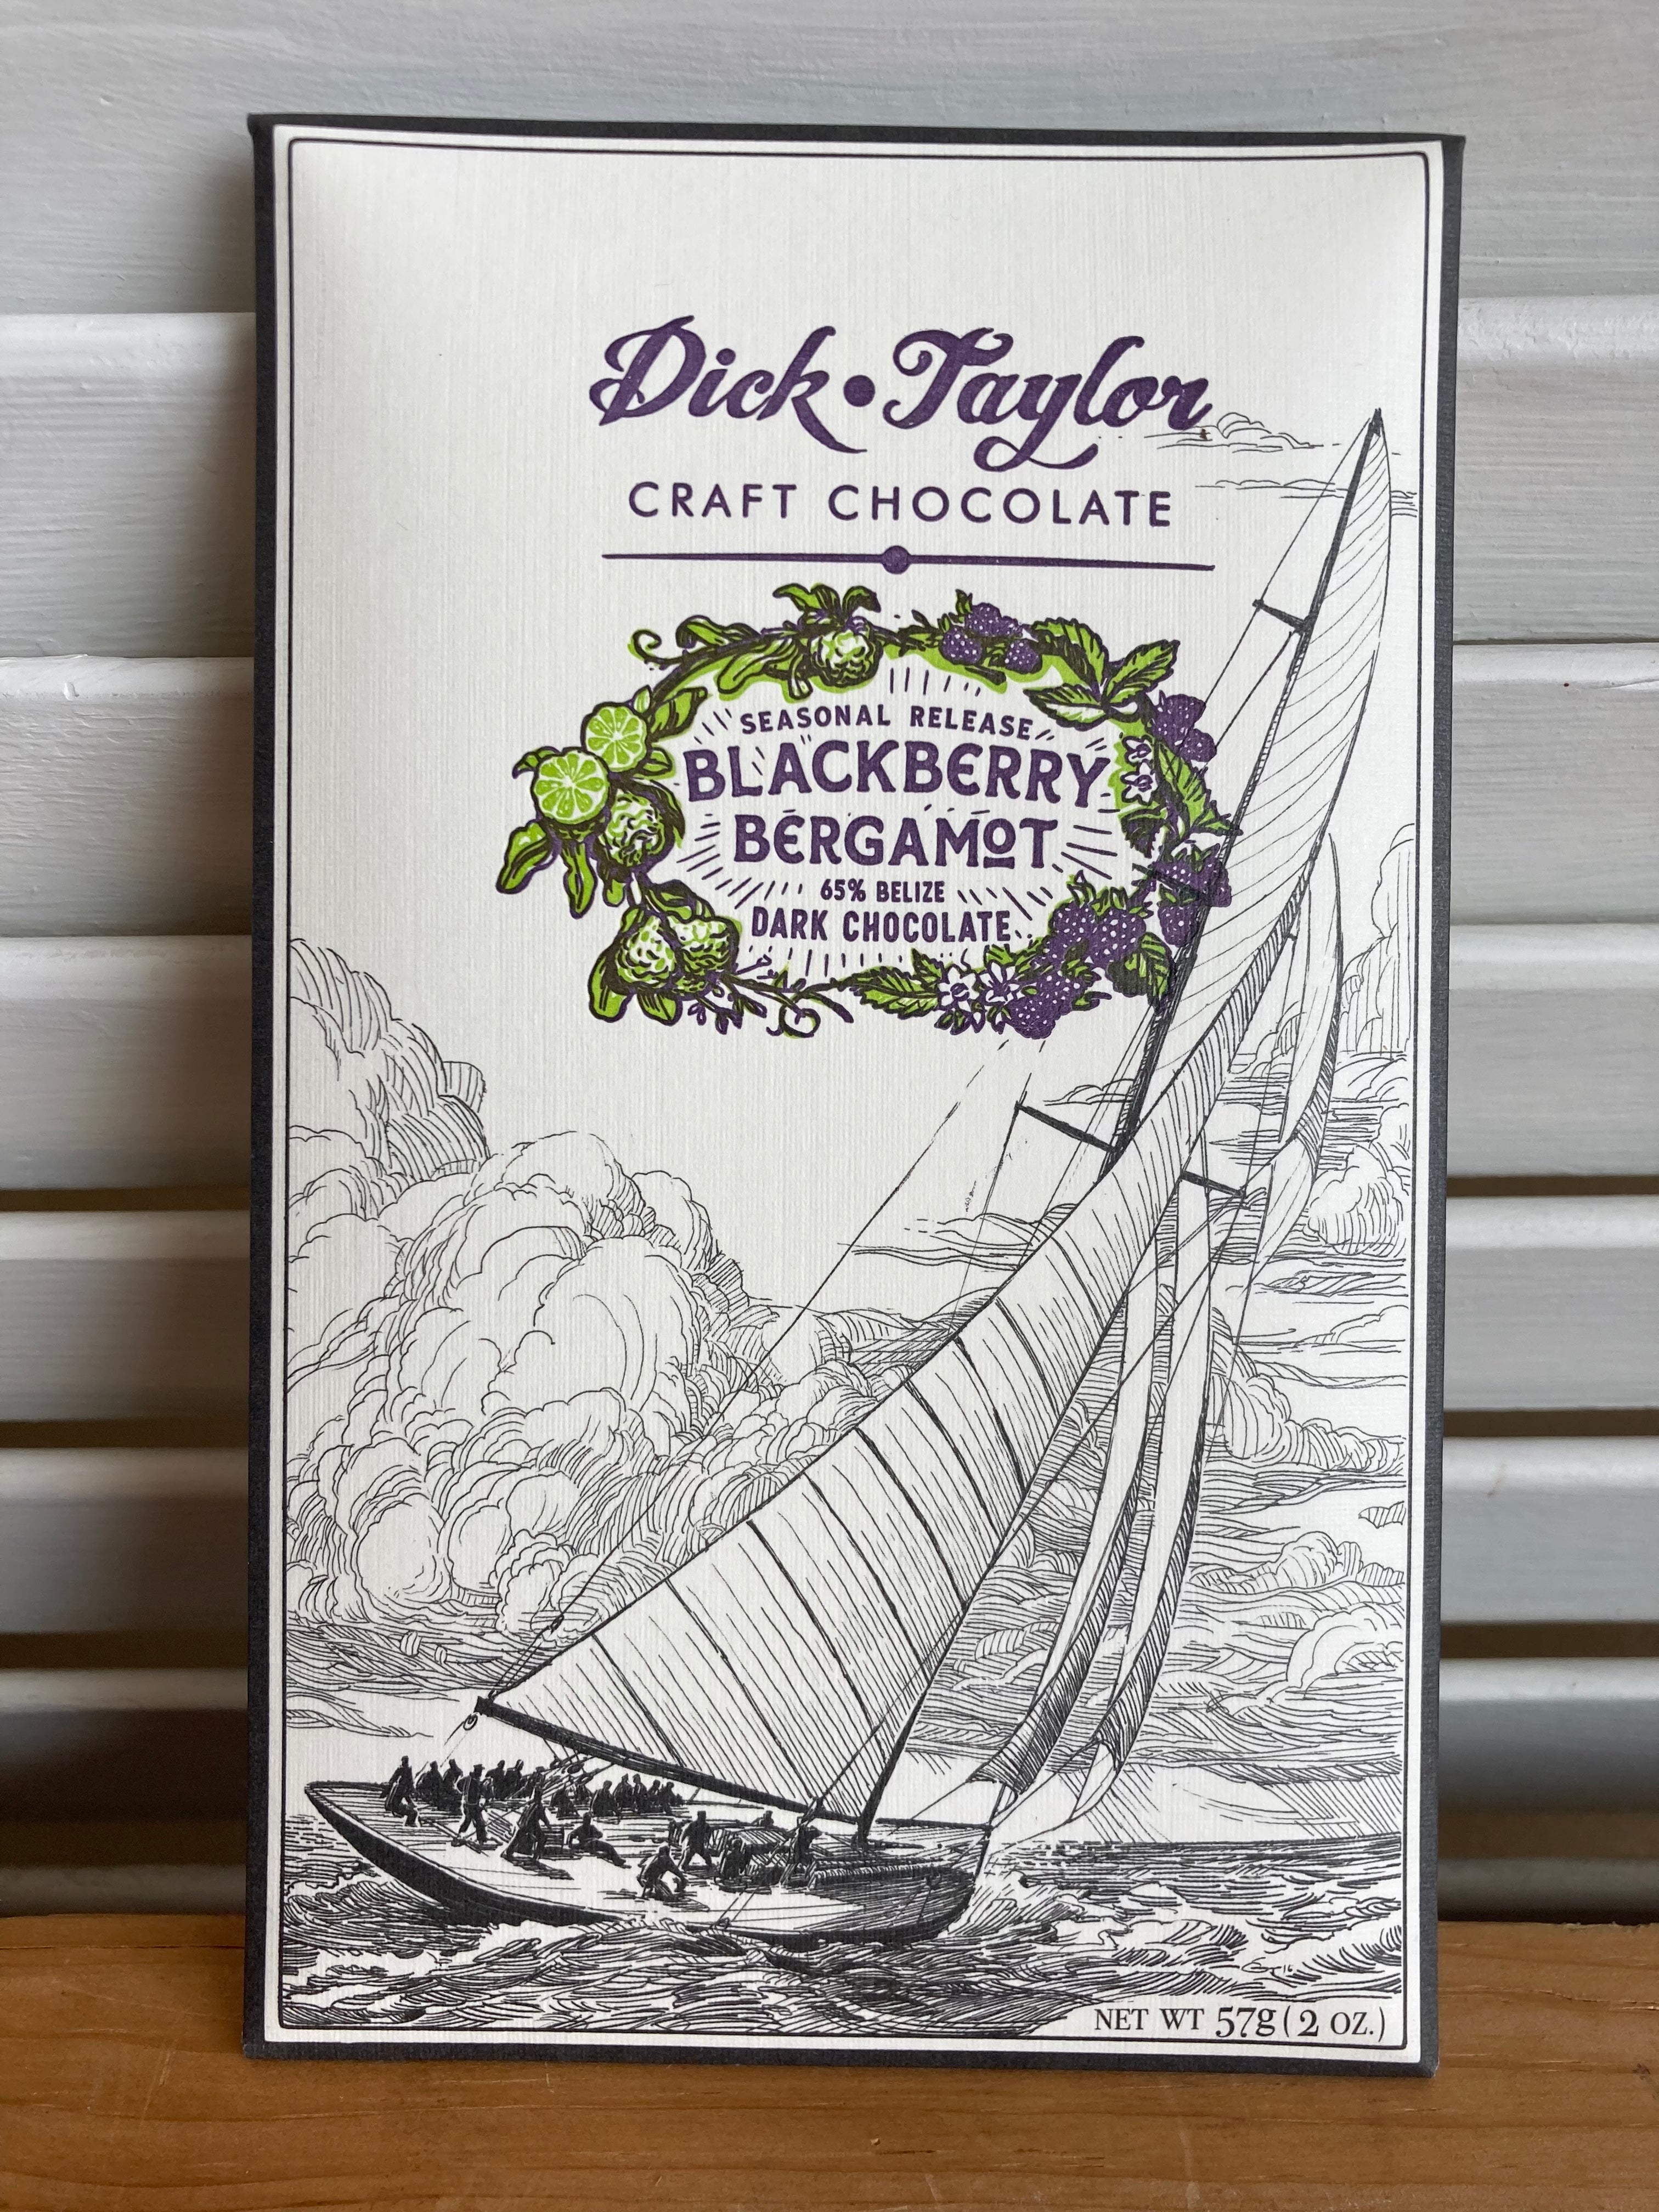 Blackberry Bergamot - Dick Taylor Craft Chocolate